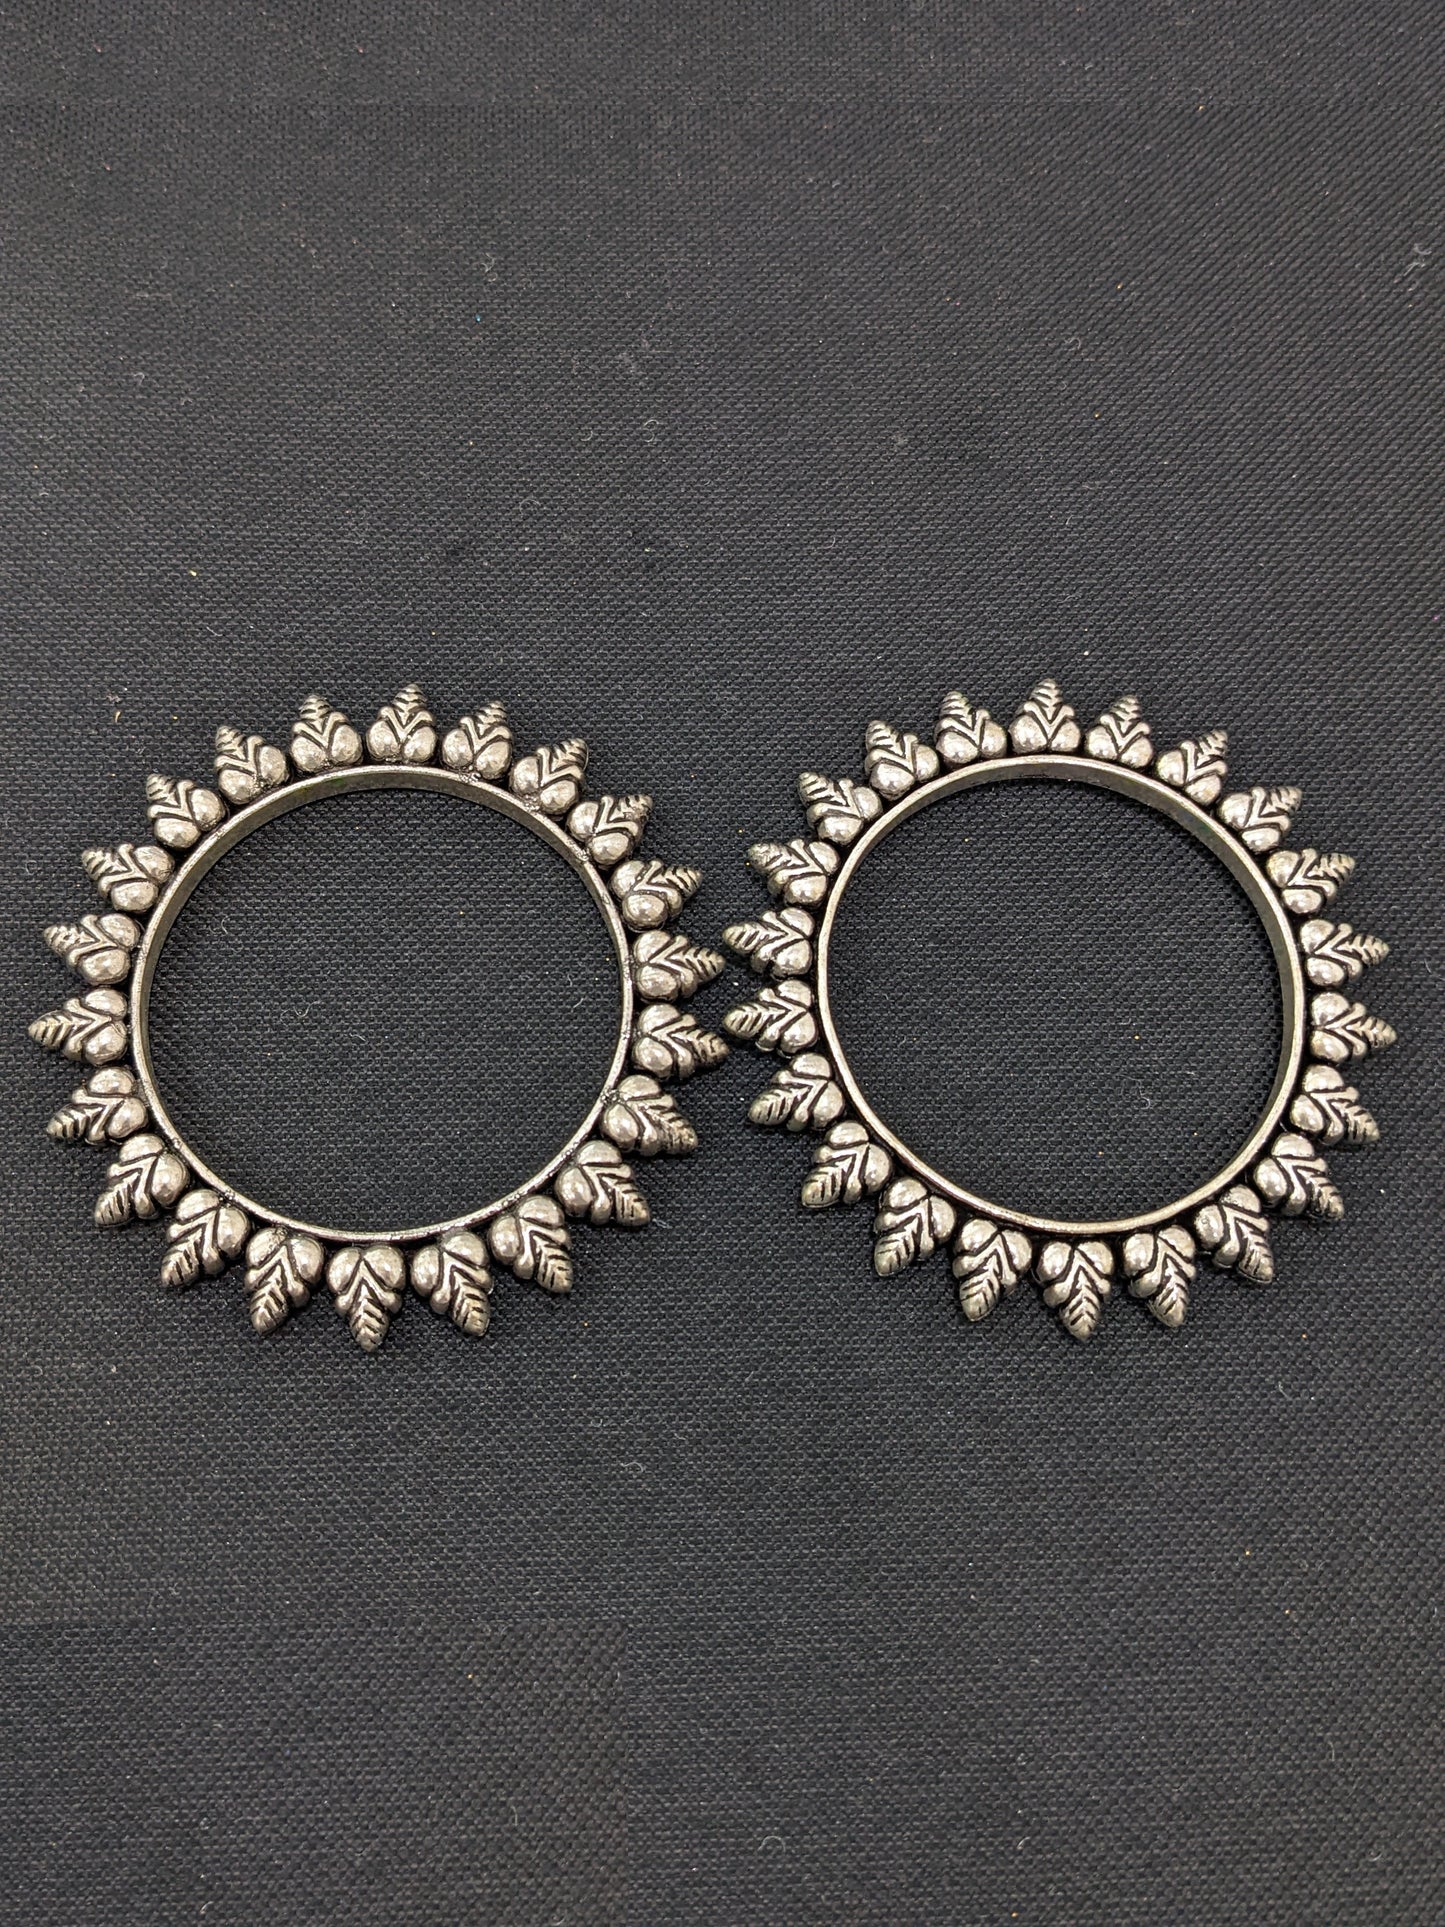 Oxidized silver pair bangles - Leaf design